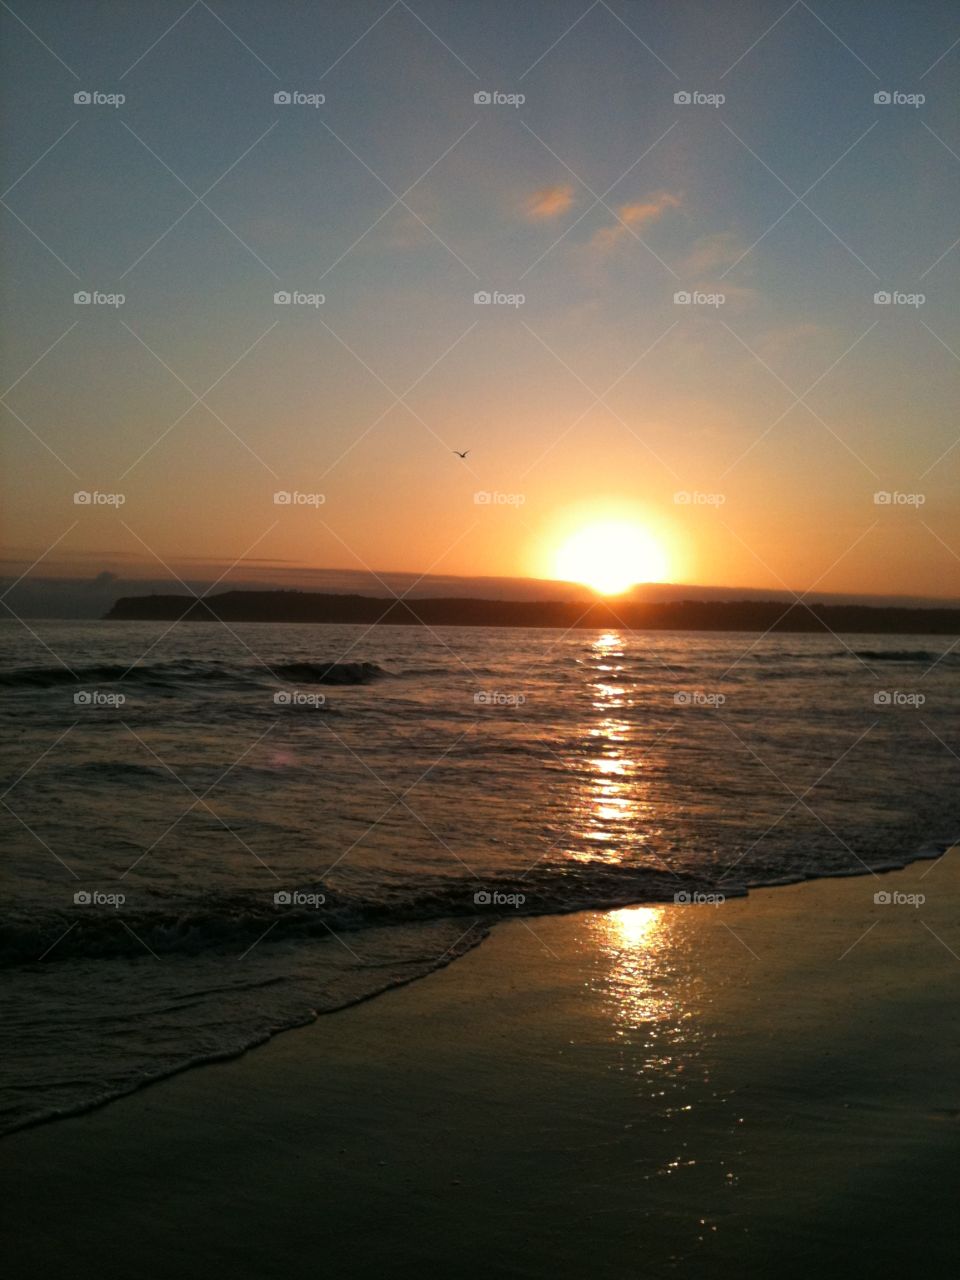 Beach Sunset. Sunset on the beach at Coronado Island, California